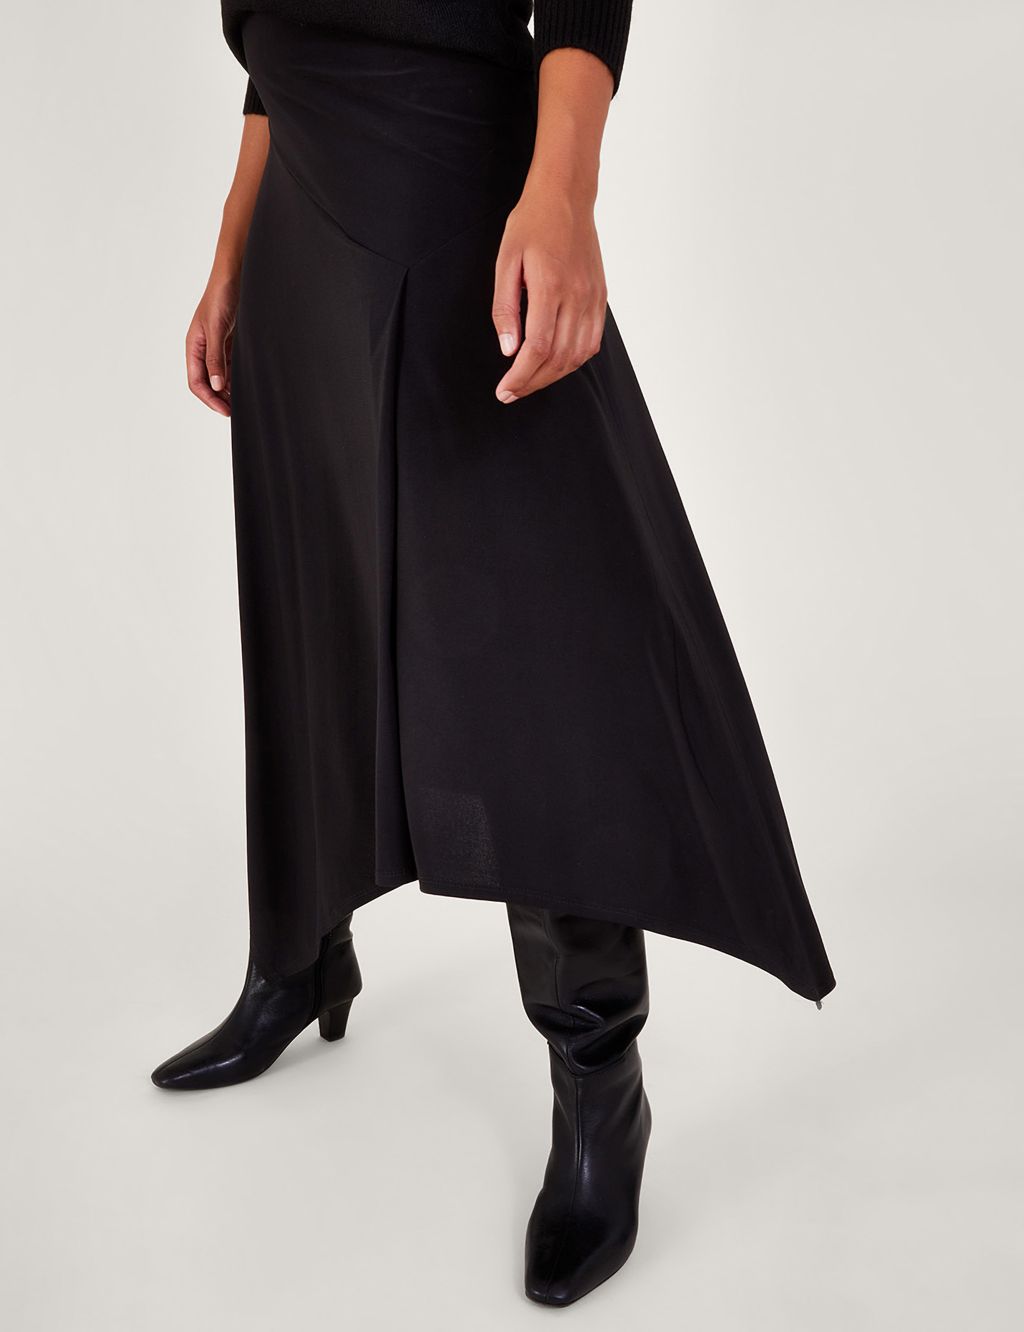 Midaxi Asymmetric Slip Skirt image 5